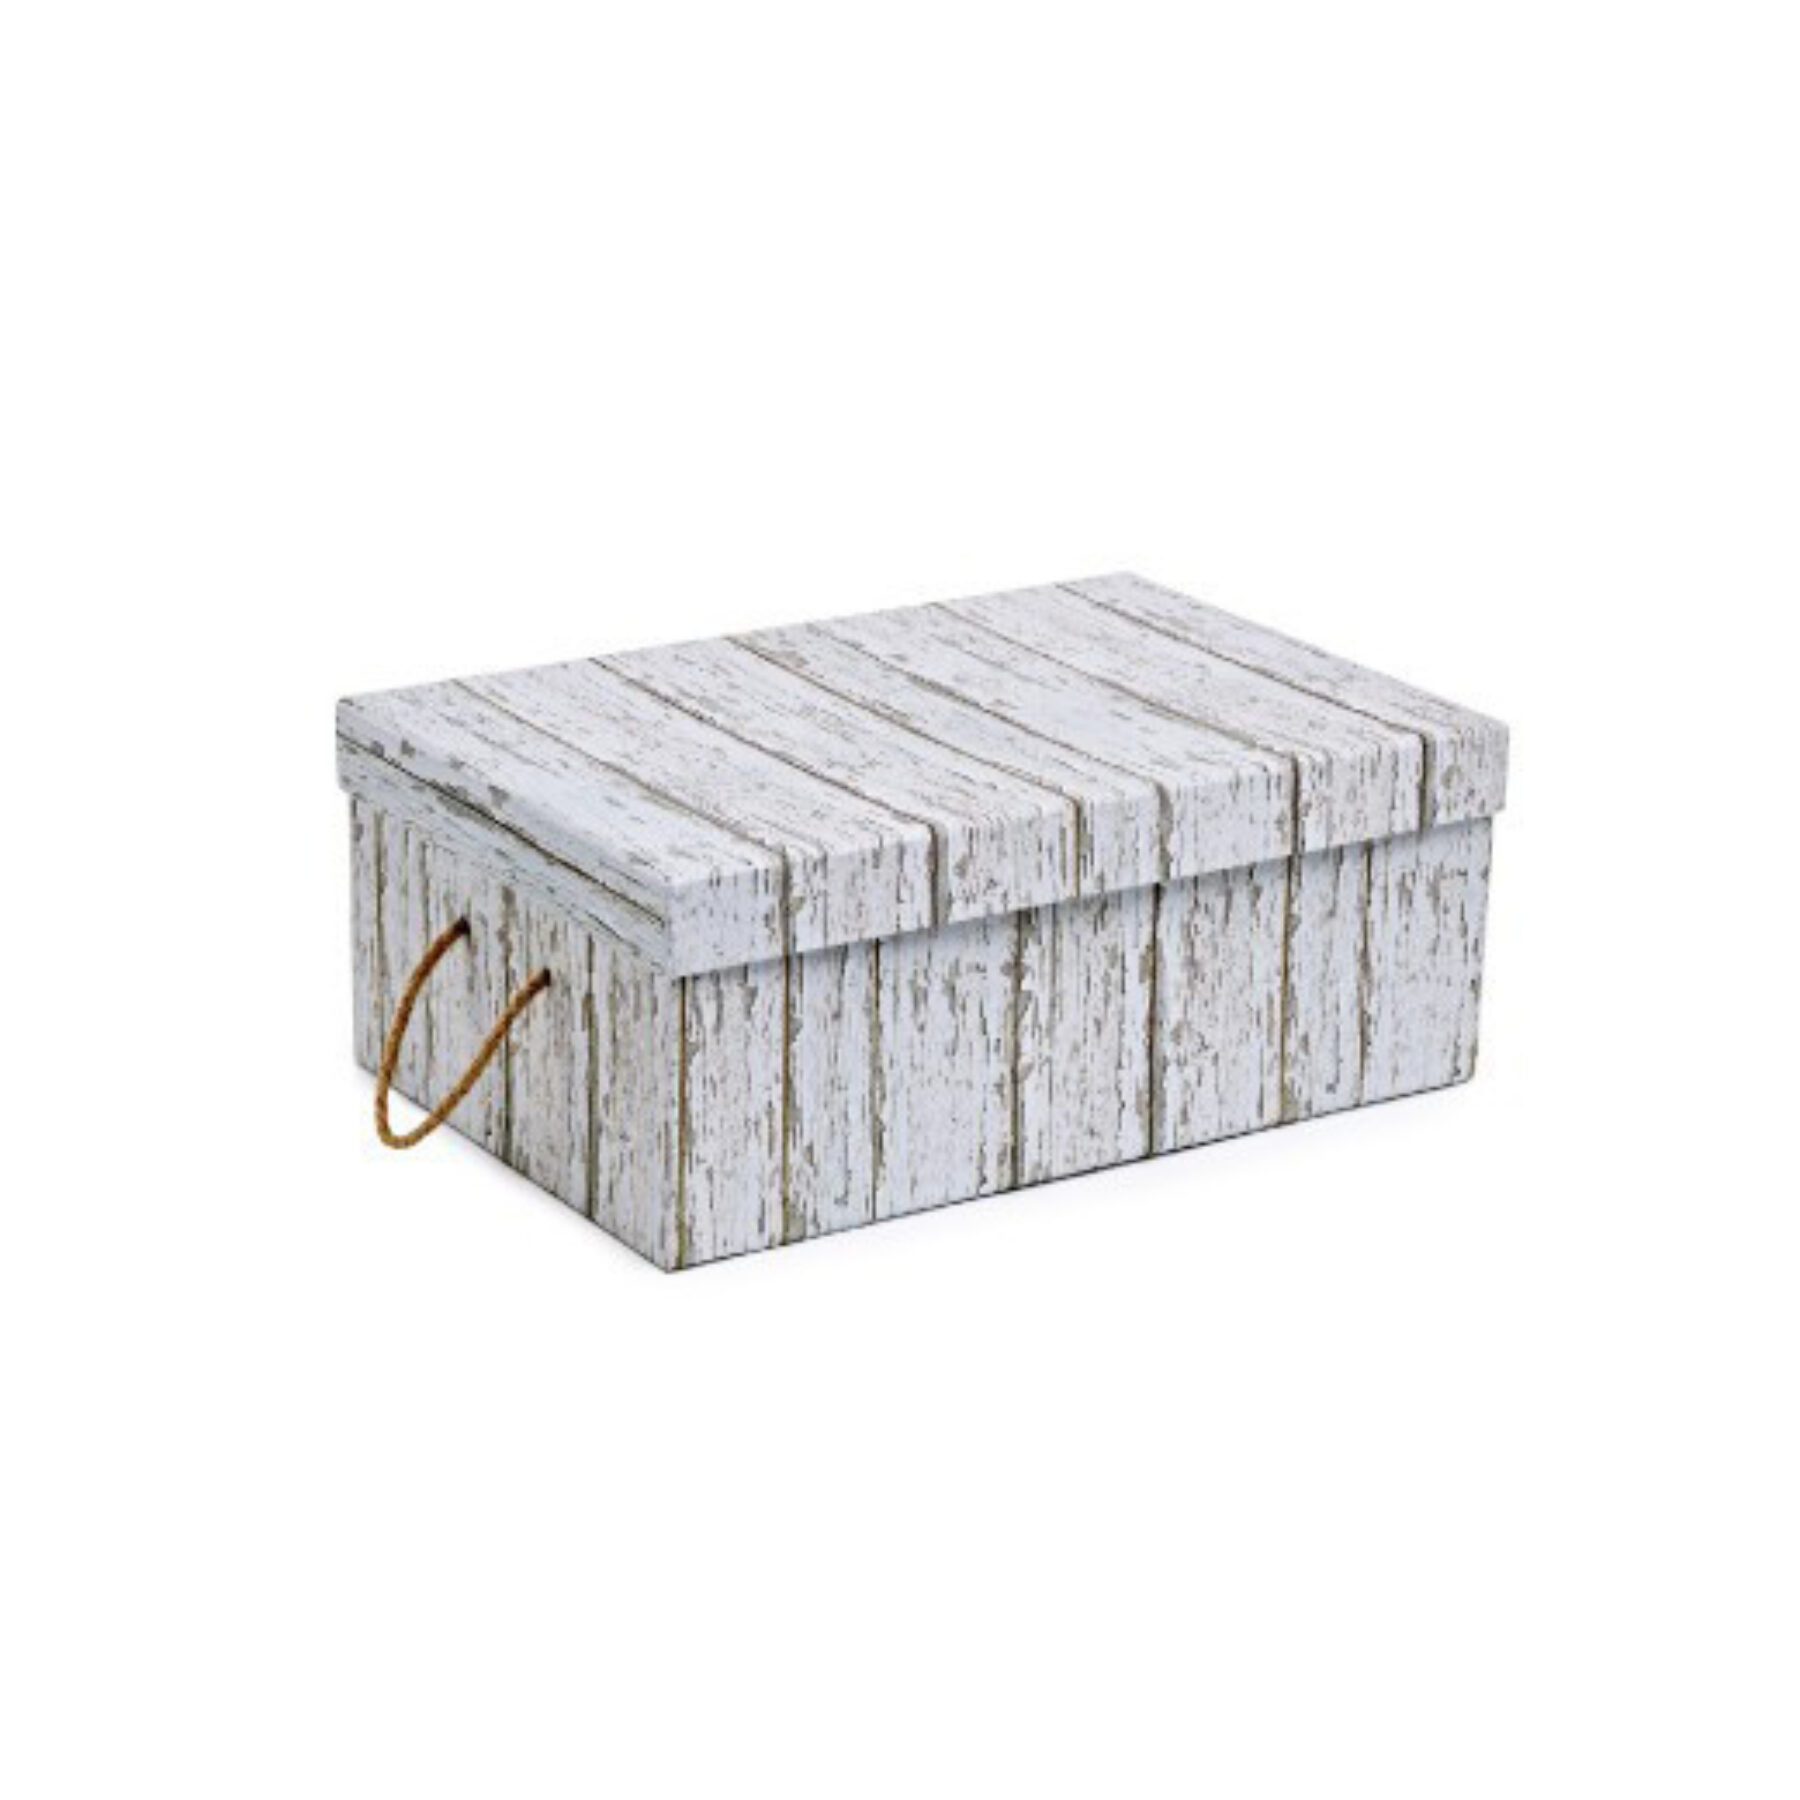 Medium Hamper Box - White Wood Print